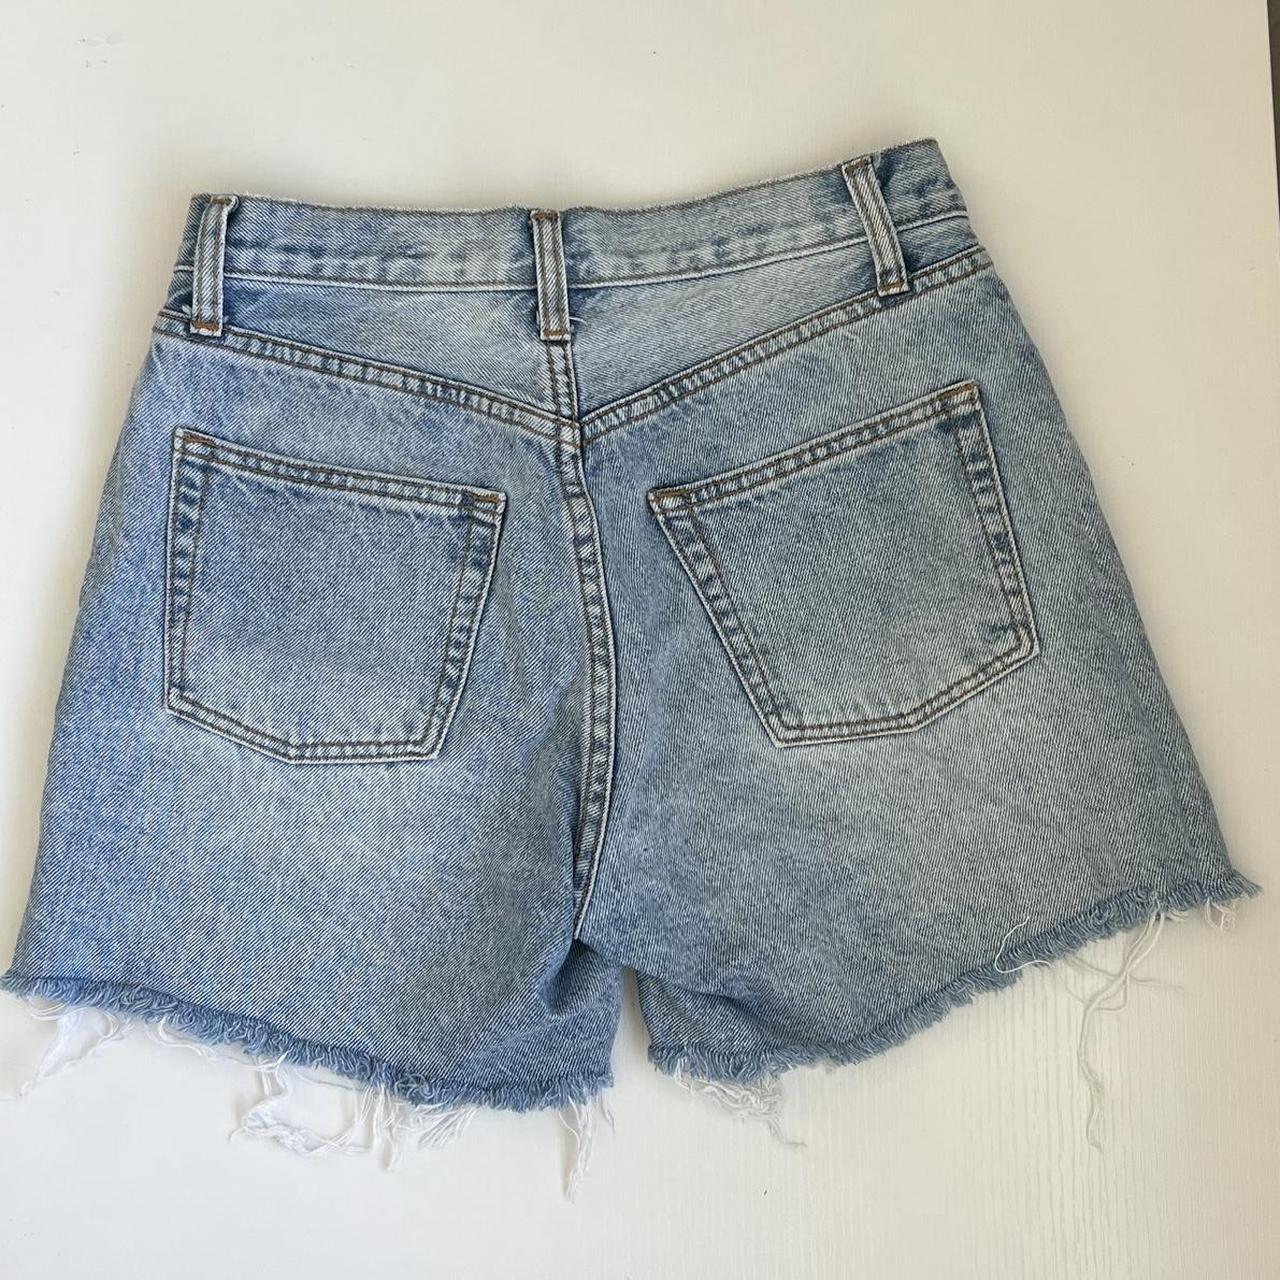 Brandy Jean shorts •no flaws - Depop